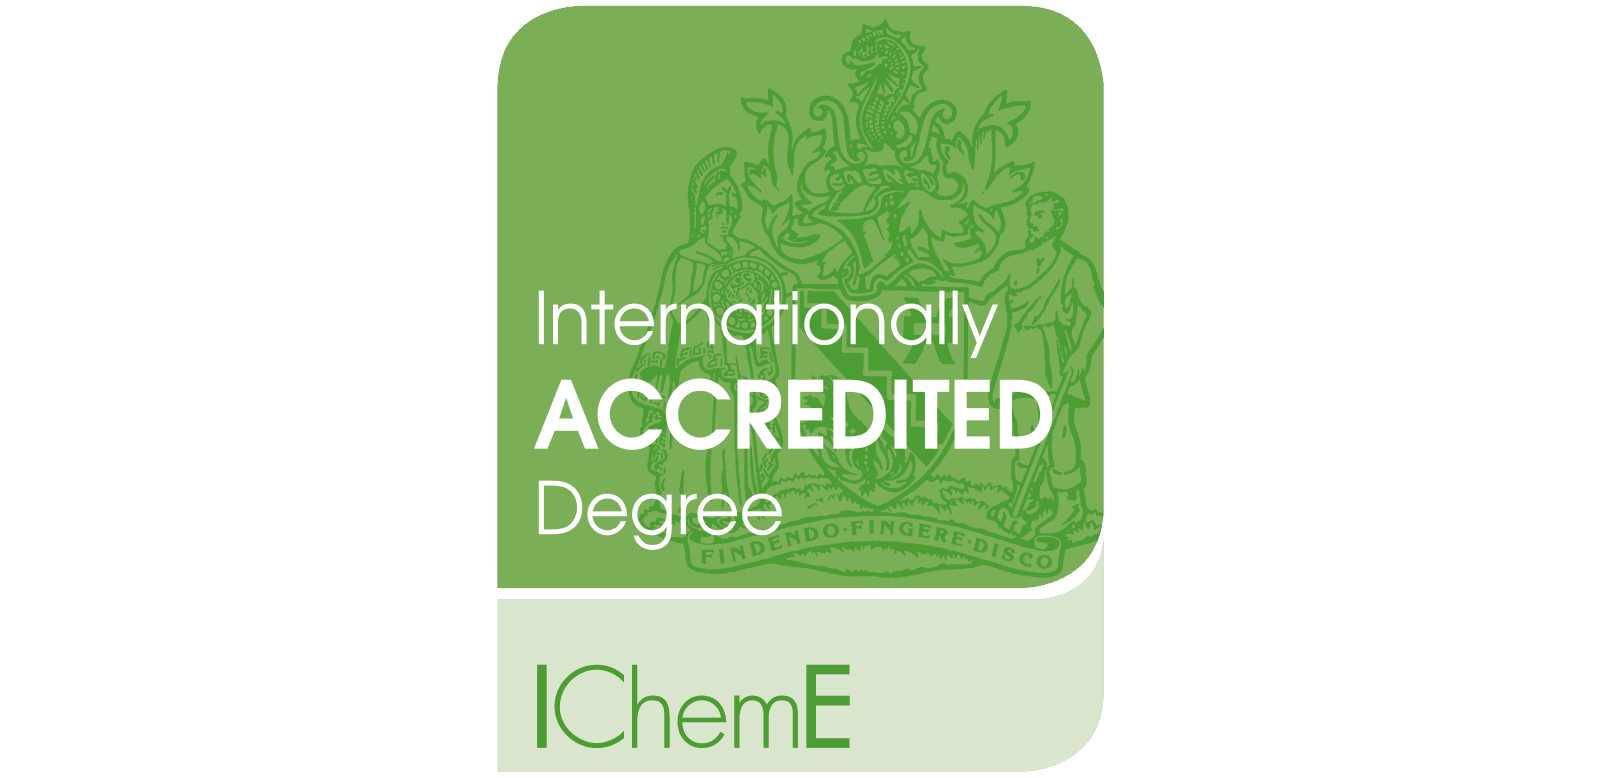 IChemE Internationally accredited degree